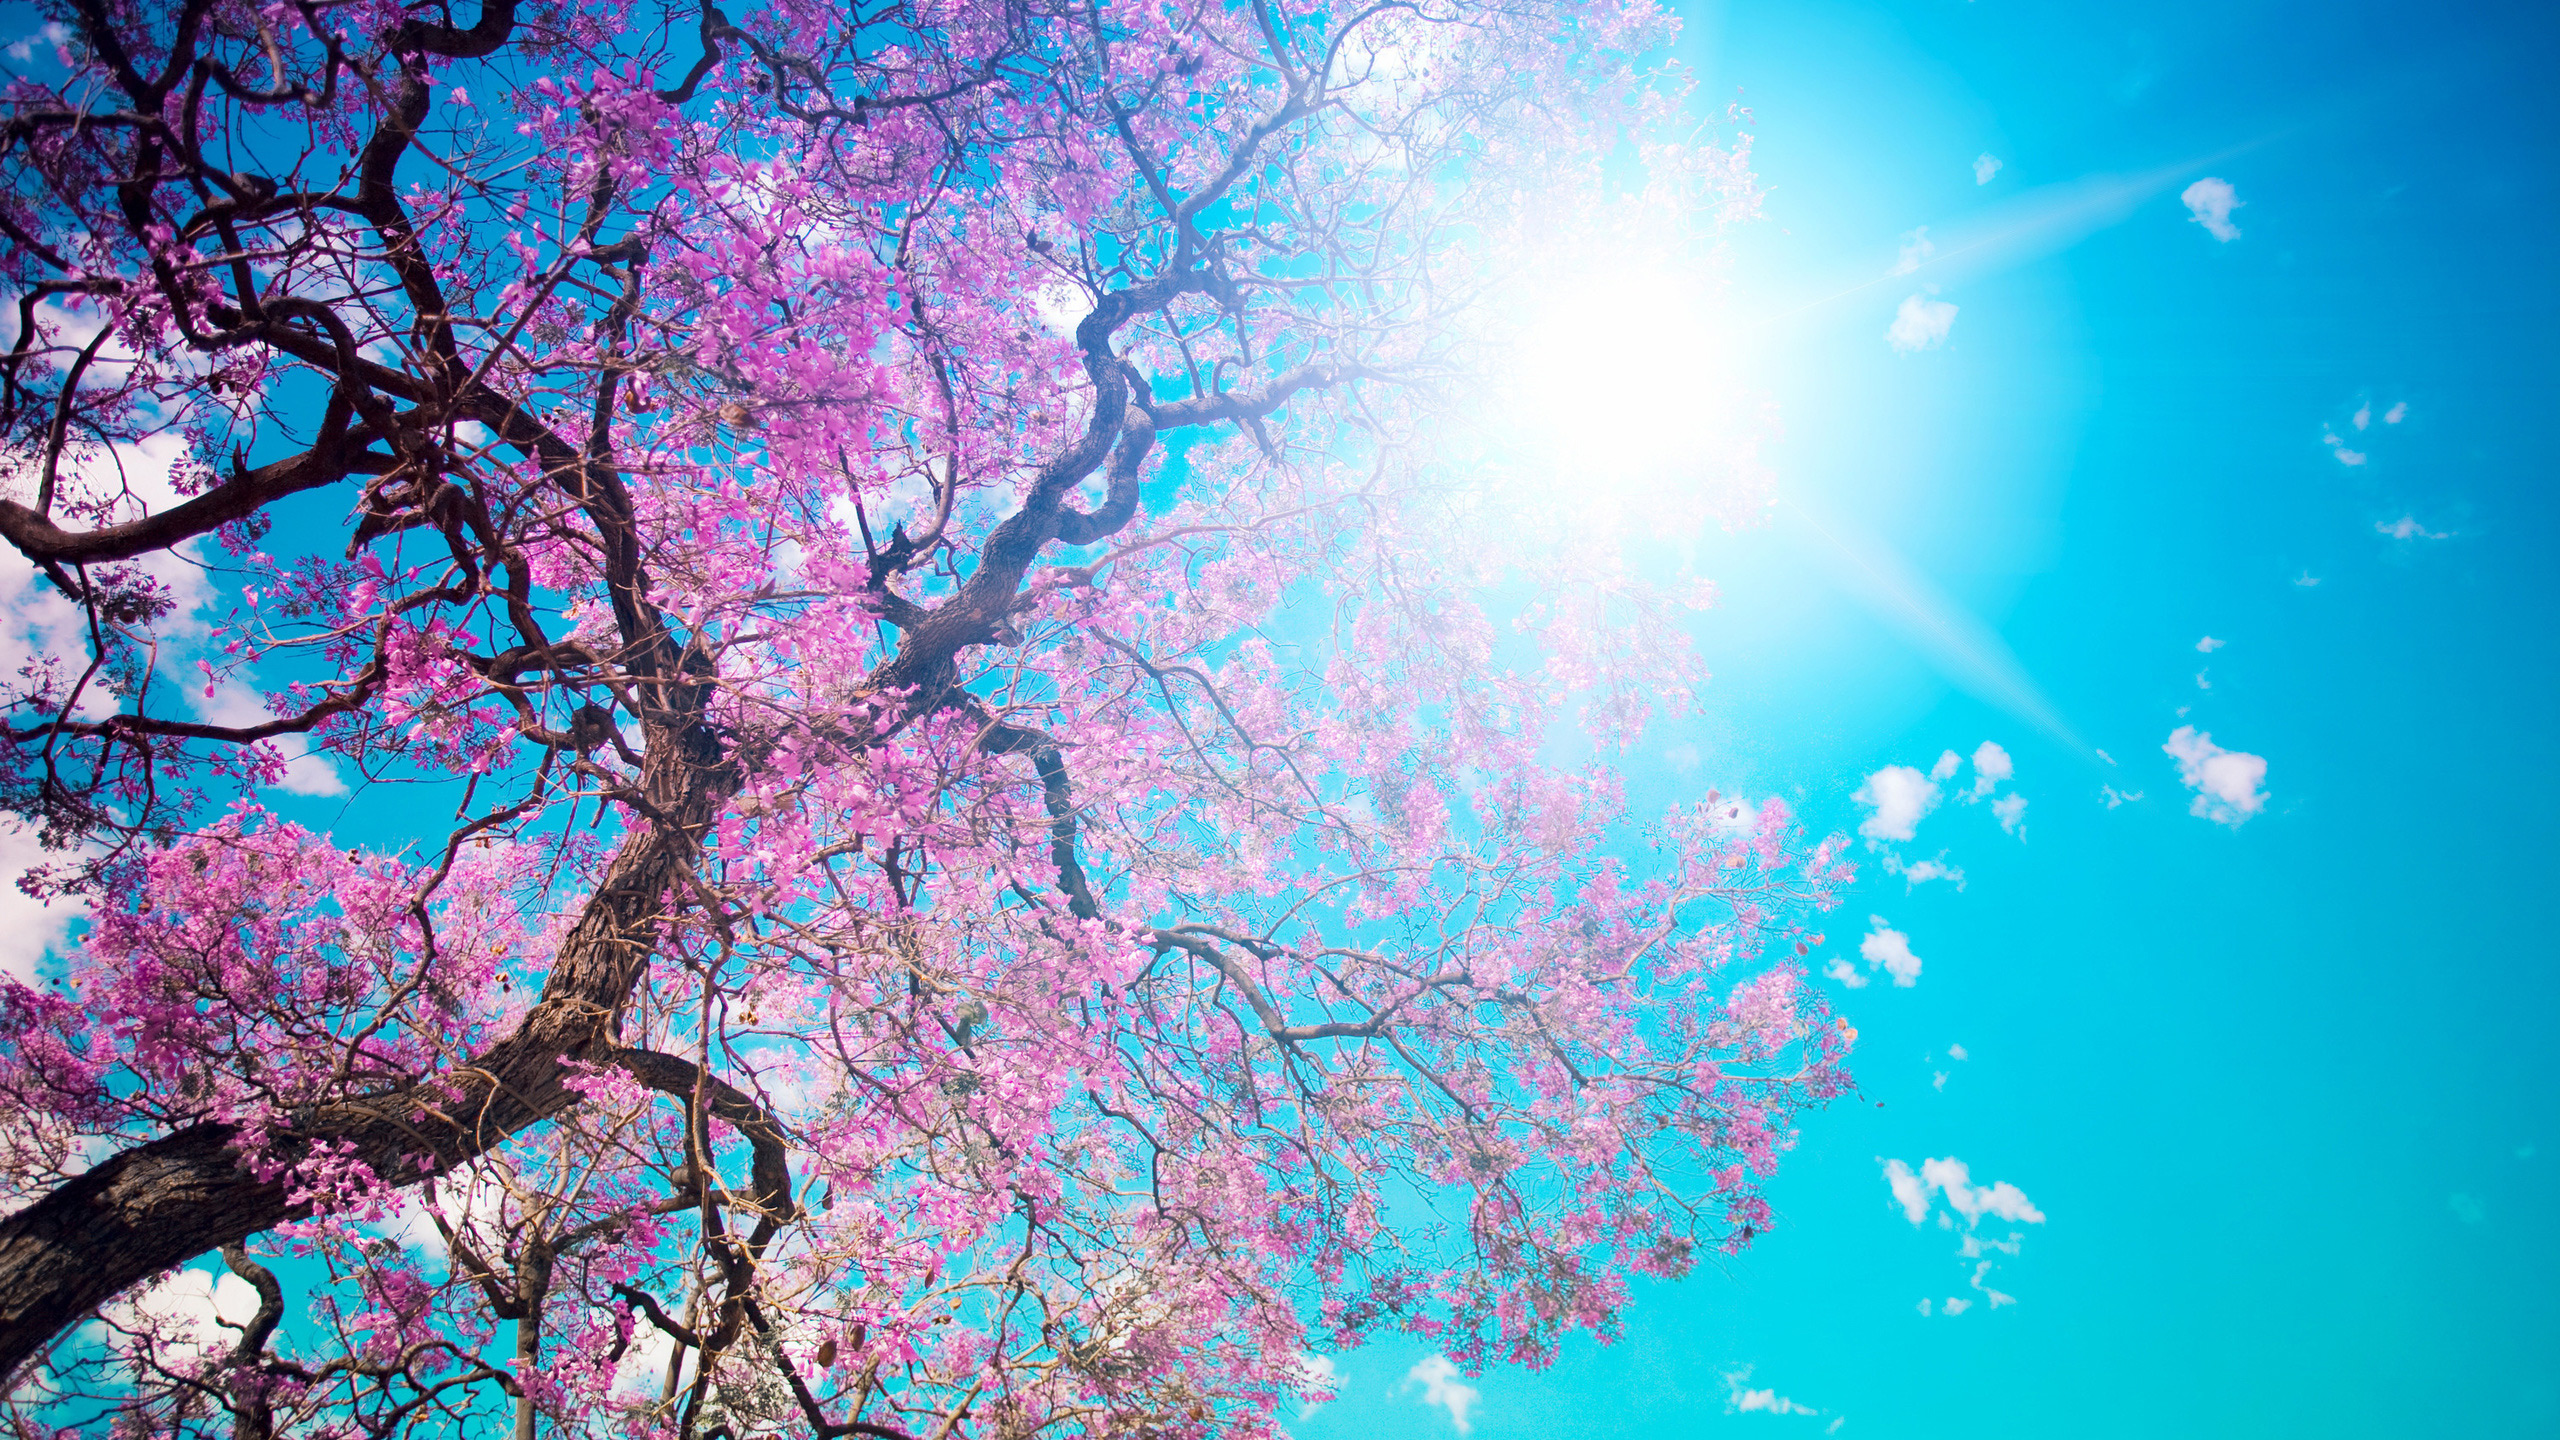 Wallpapers Sakura Pink Flowers Blue Sky 2560x1440 | #1930270 #sakura